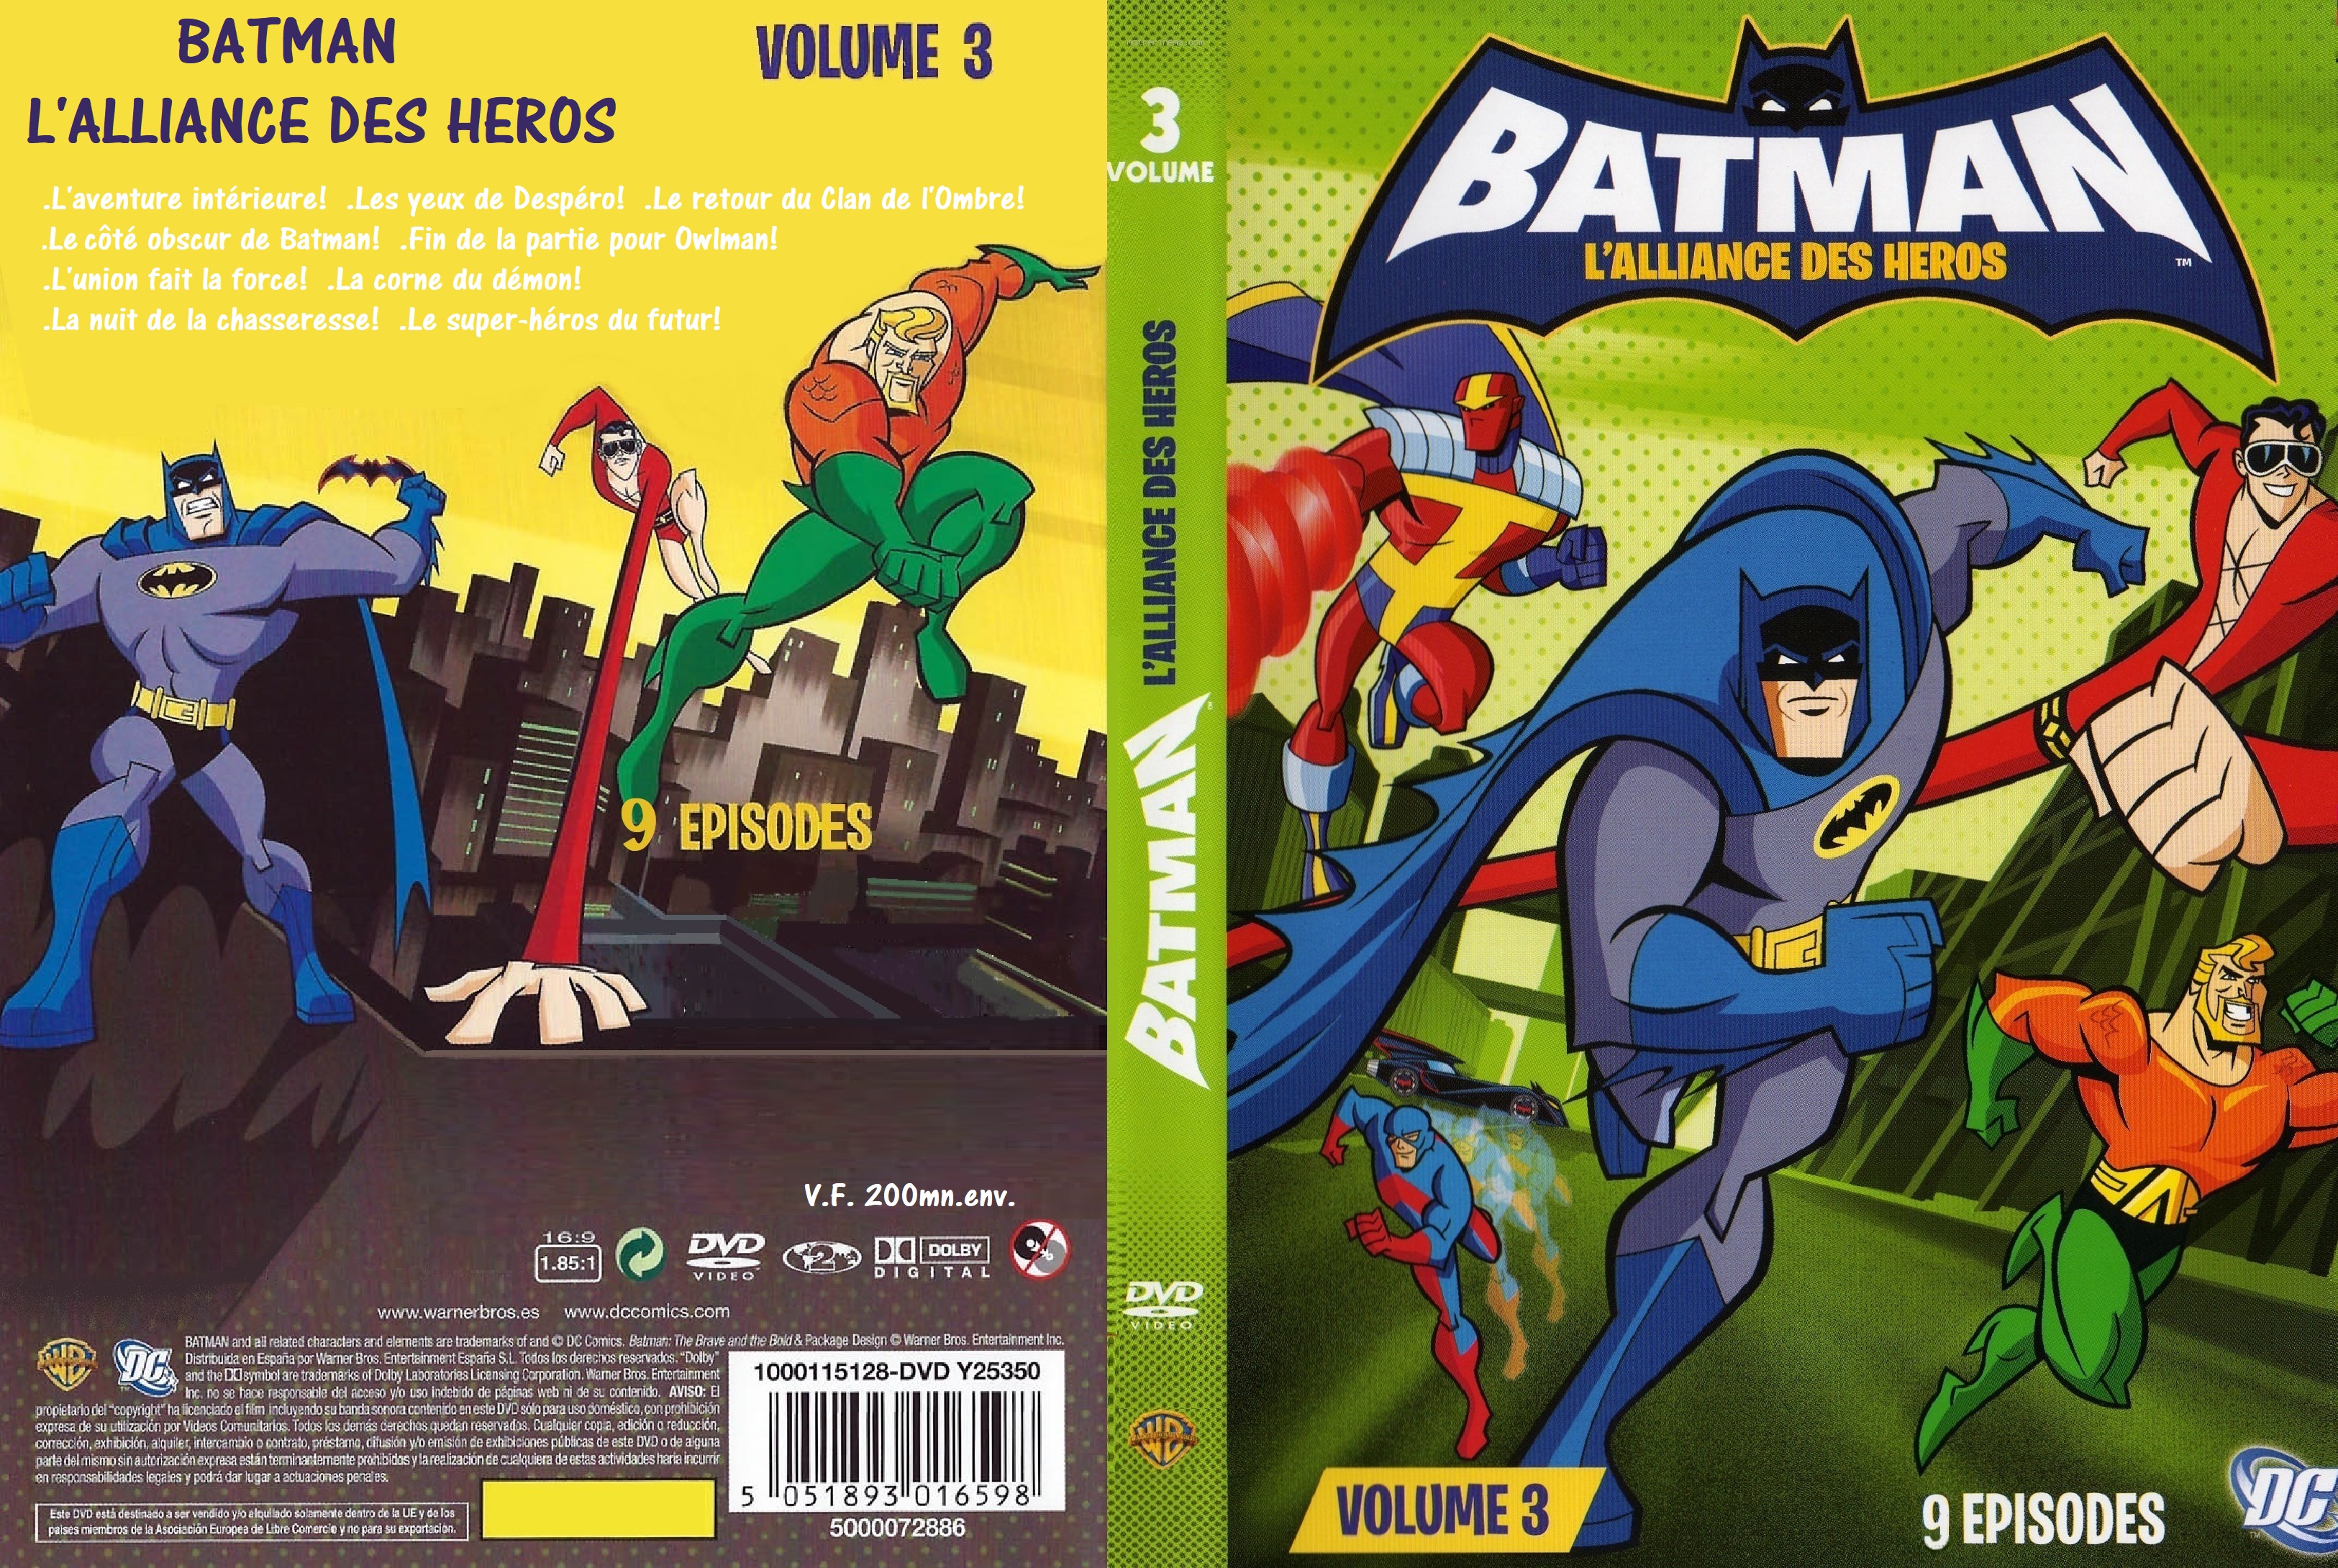 Jaquette DVD Batman l